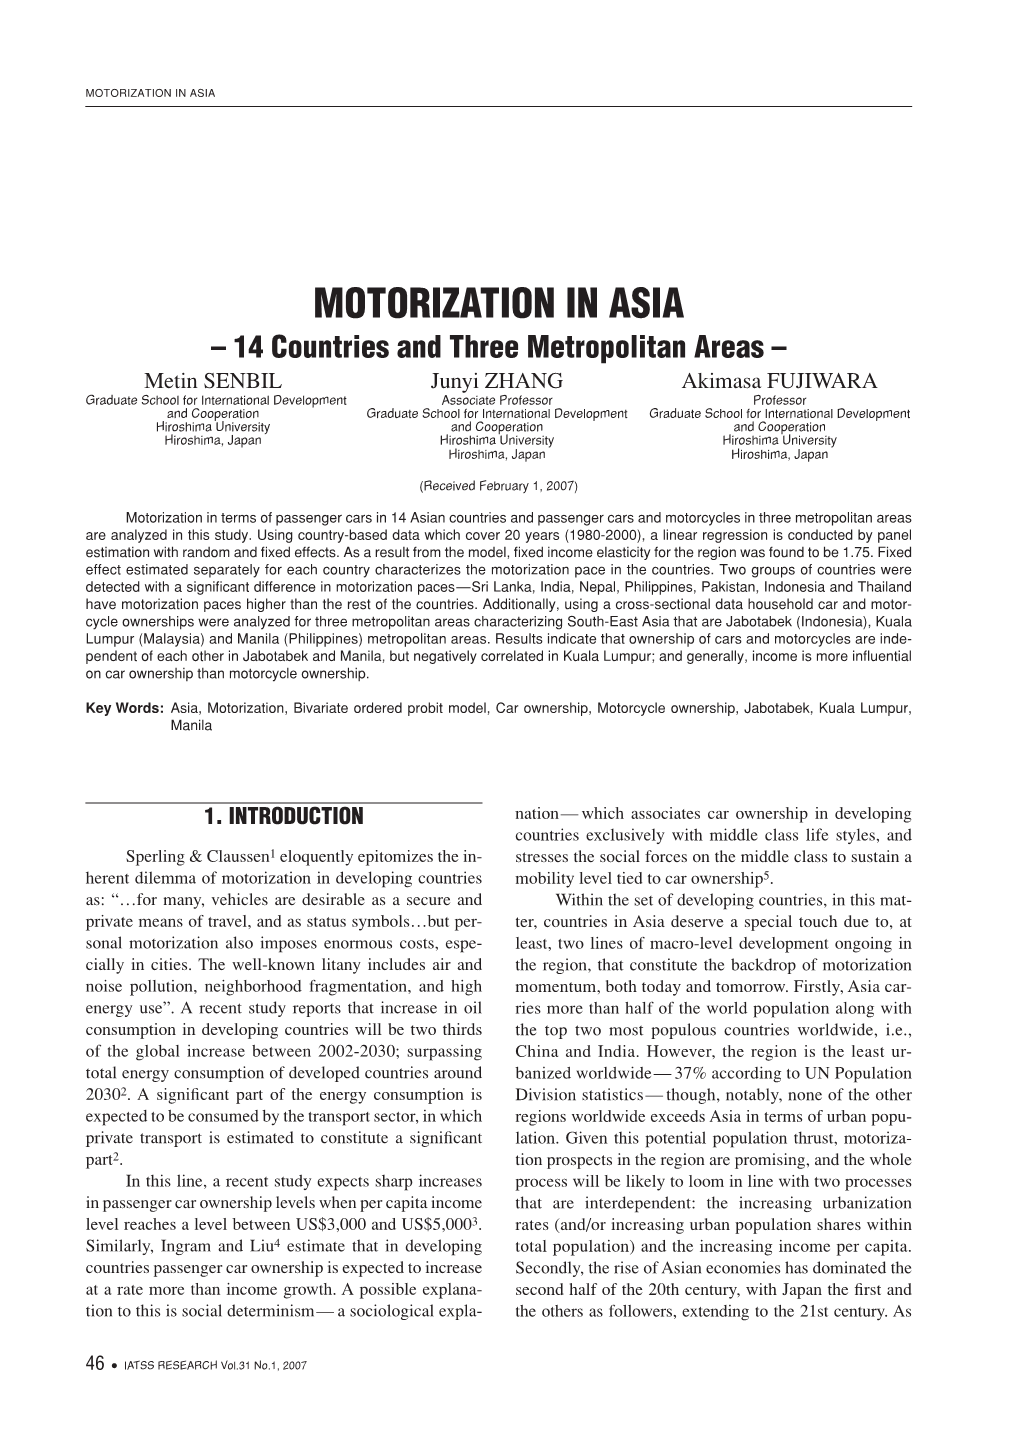 Motorization in Asia